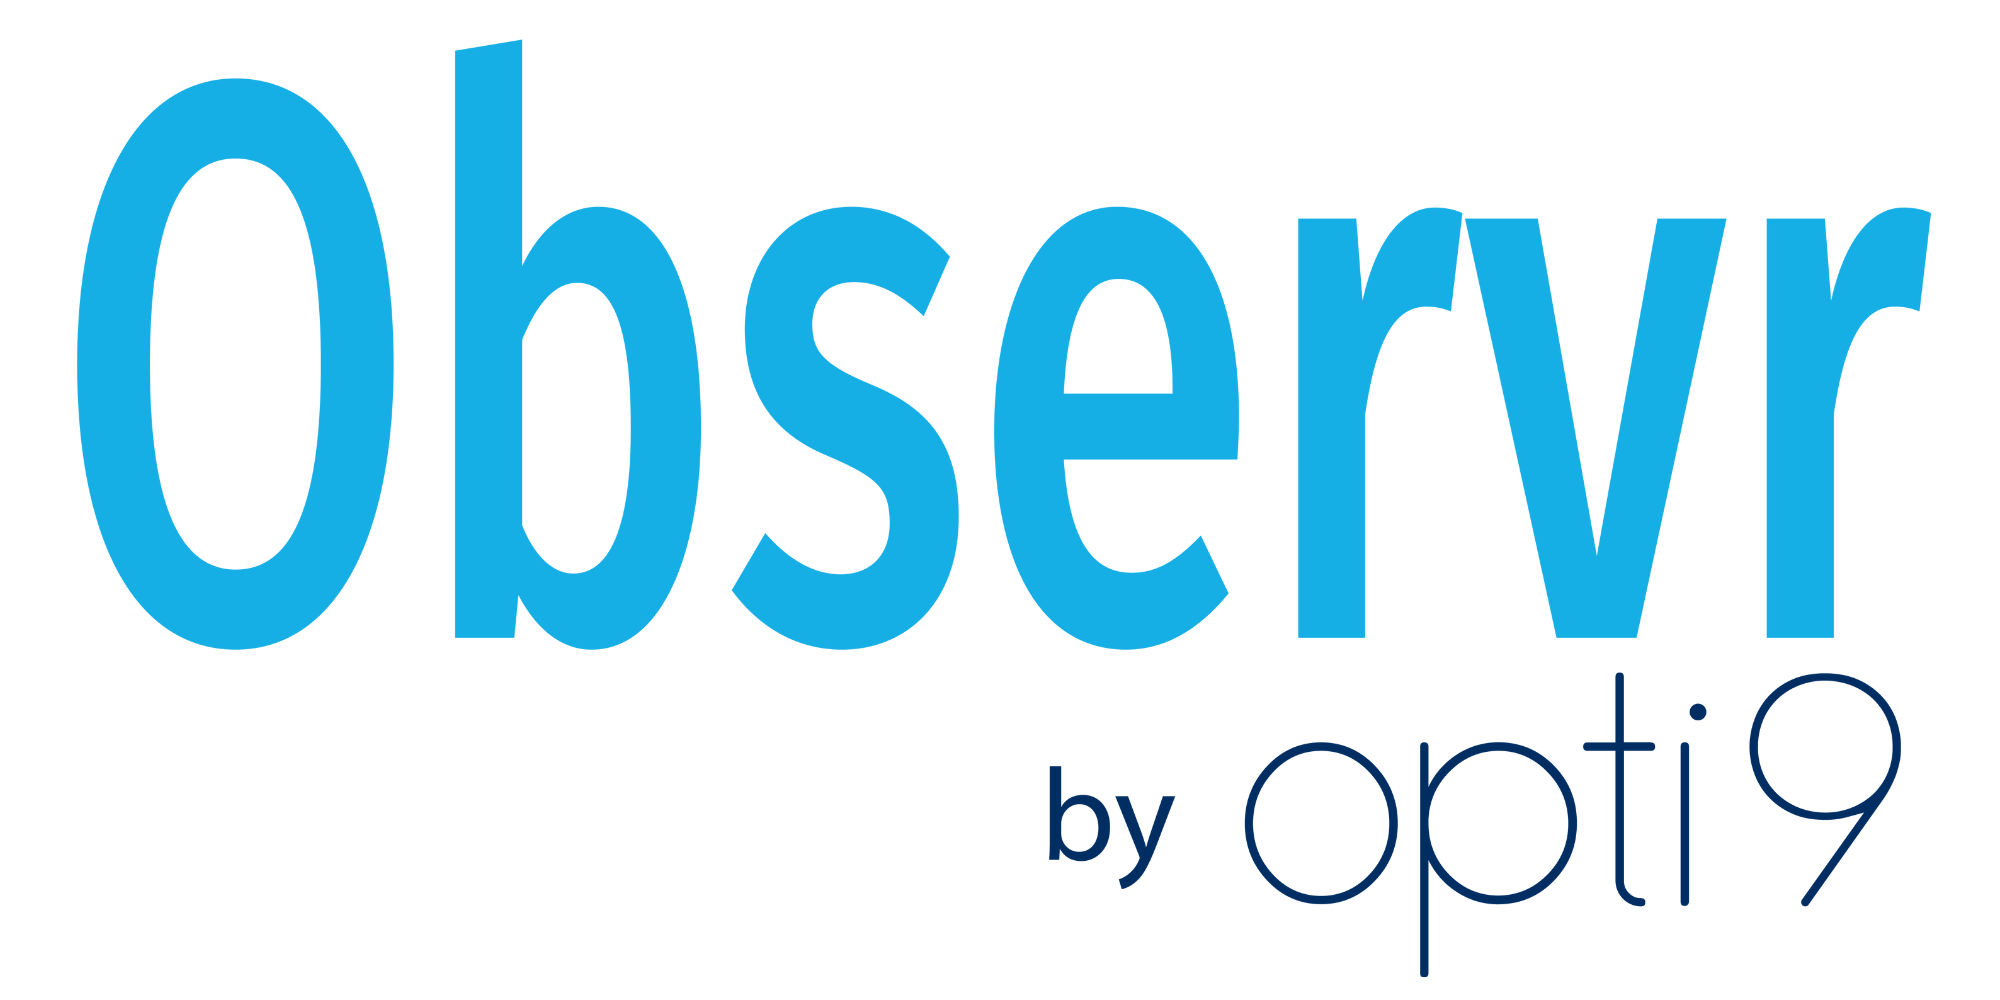 opti9 Observr Logo 2000x1000px